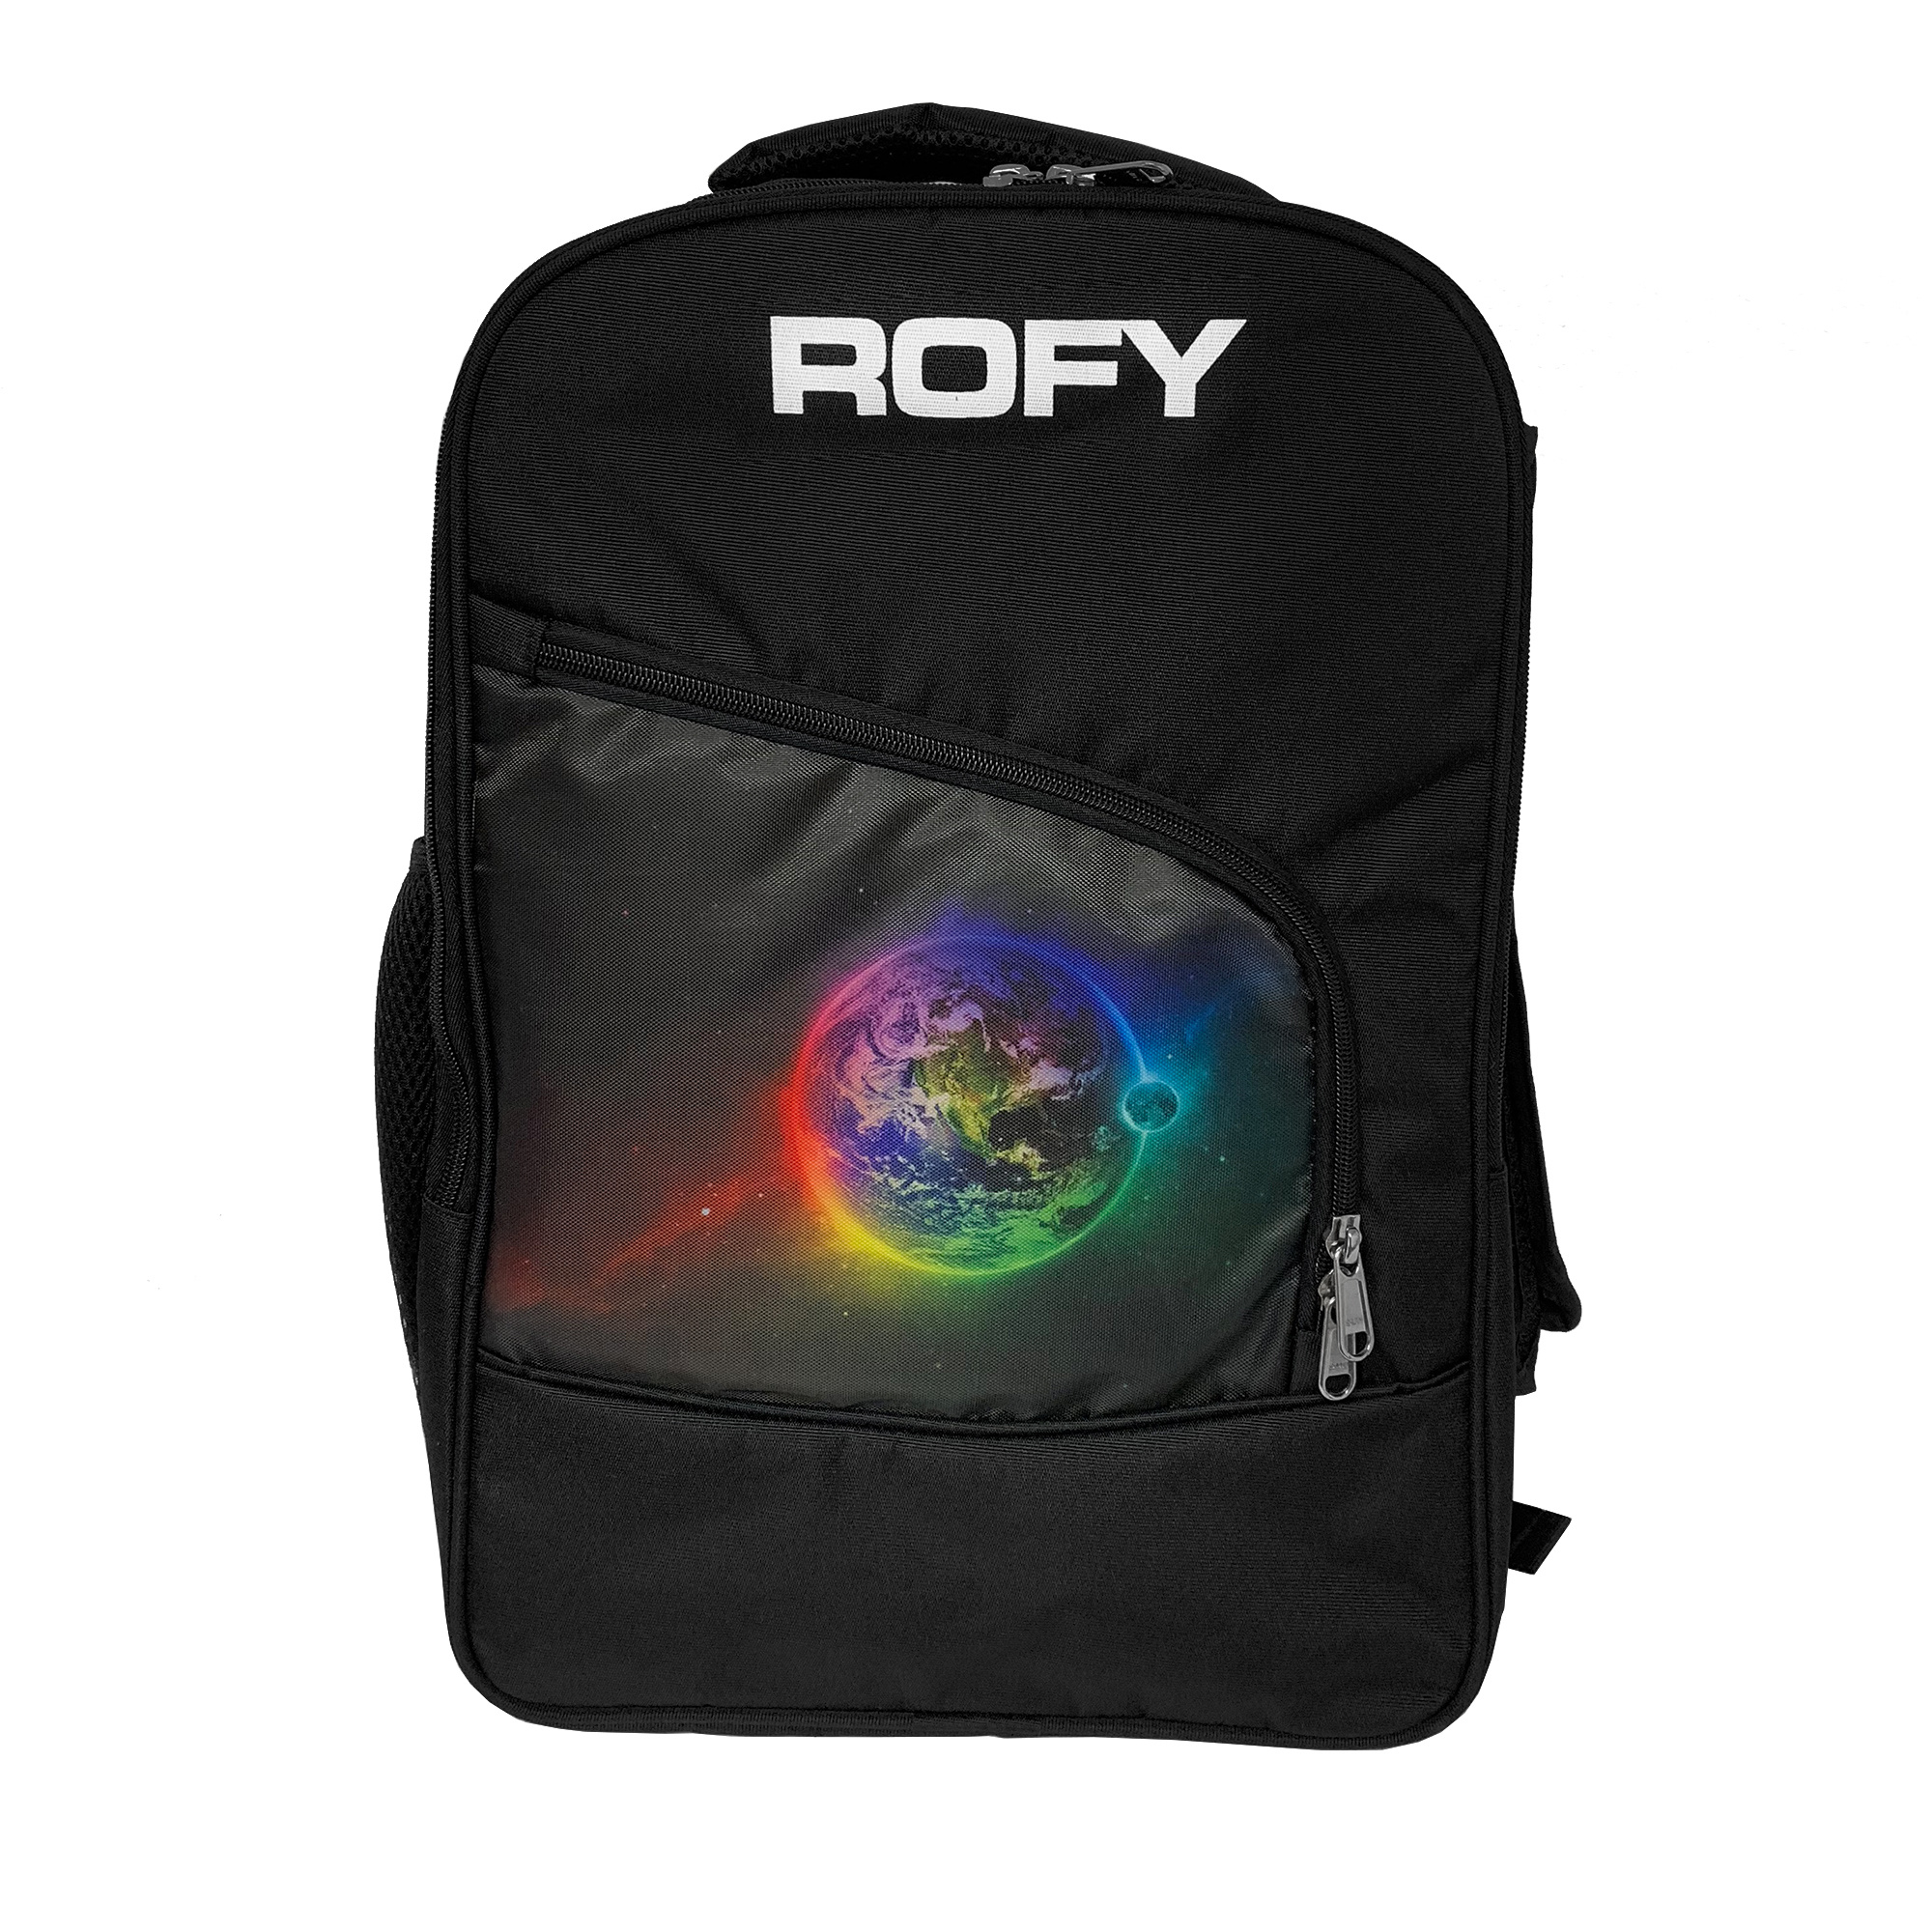 ROFY Backpack Galaxy JR